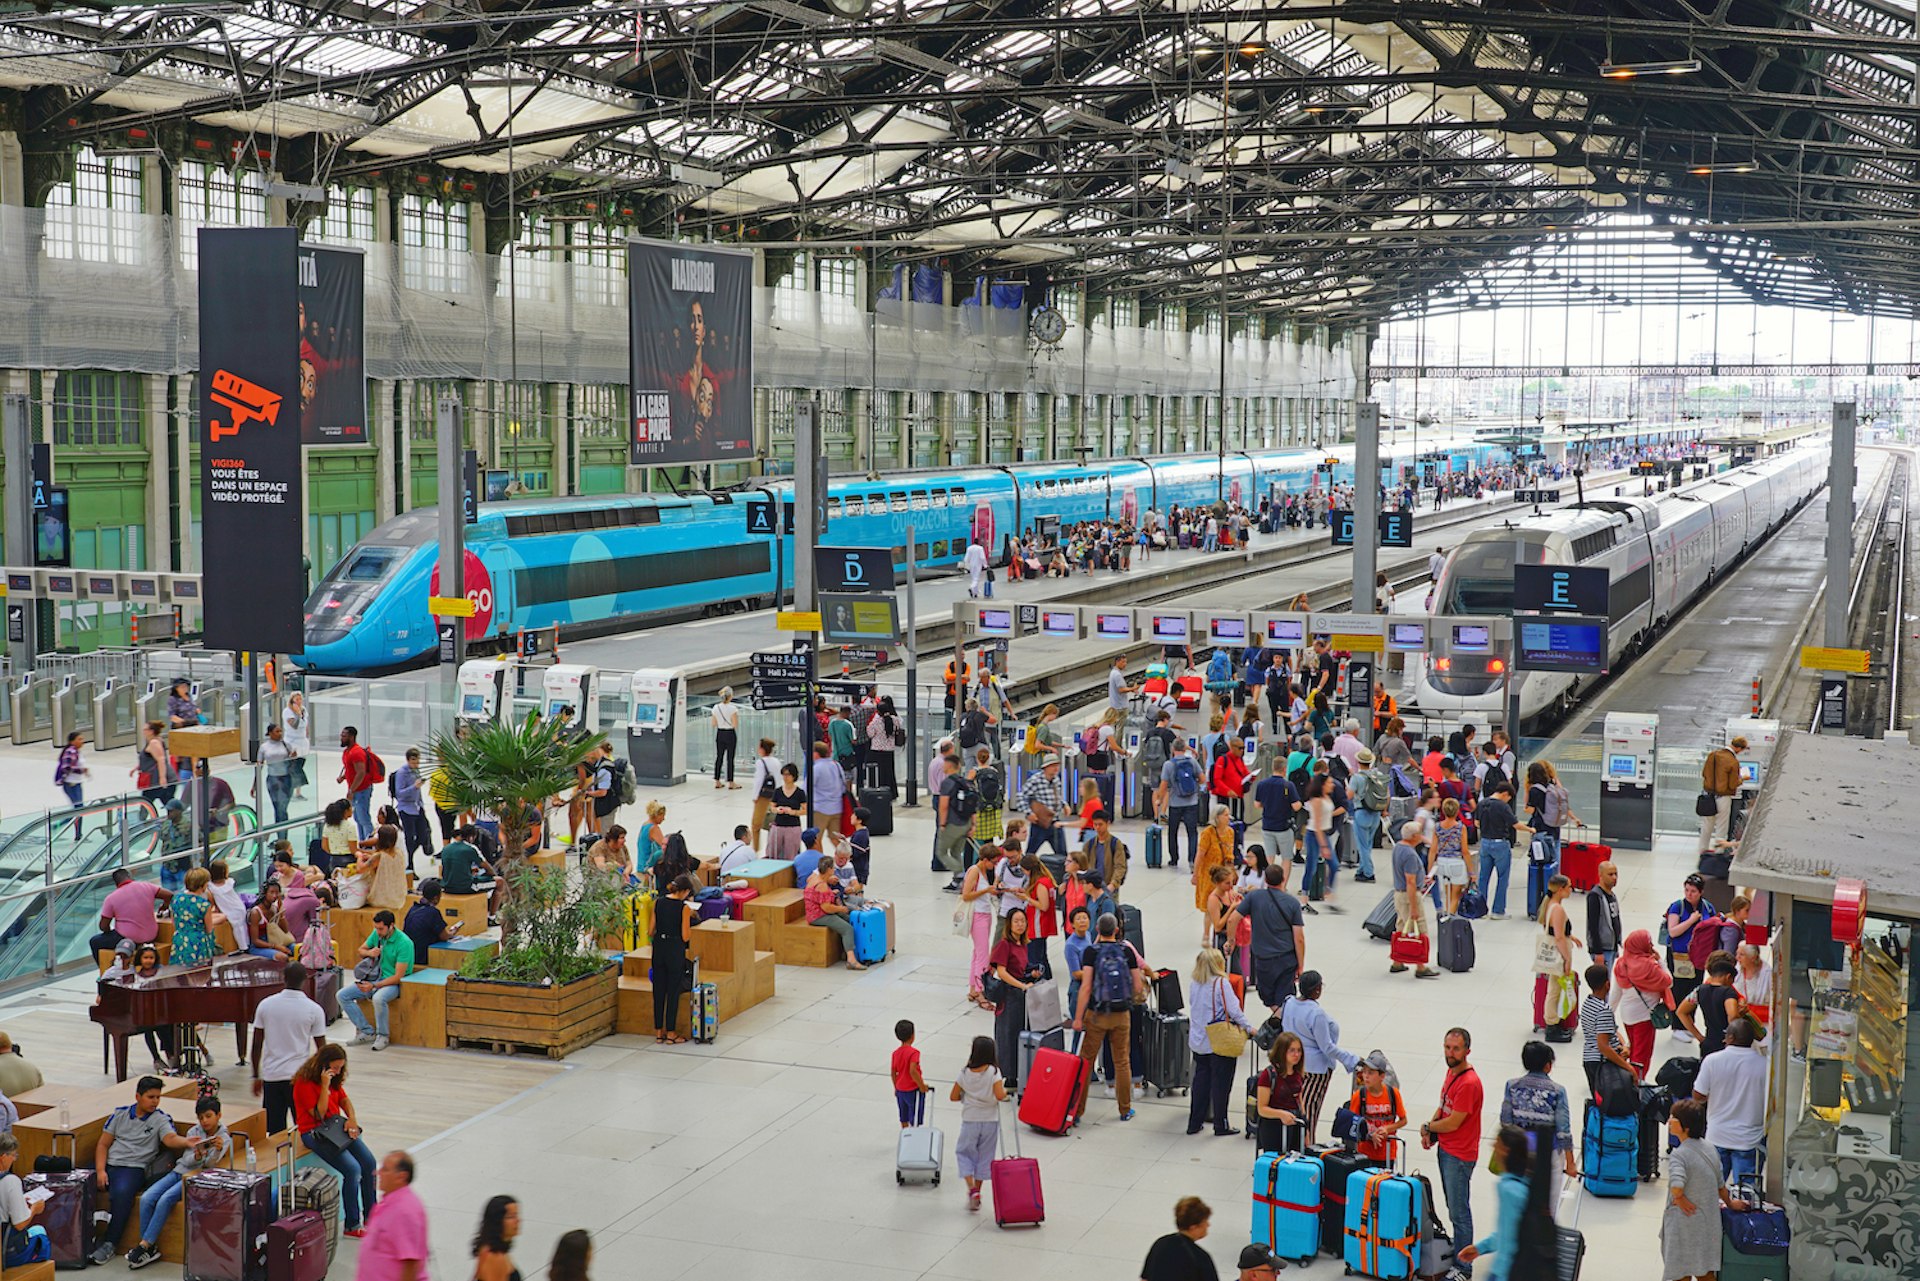 View of trains and passengers at the historic Gare de Lyon train station, Paris, France